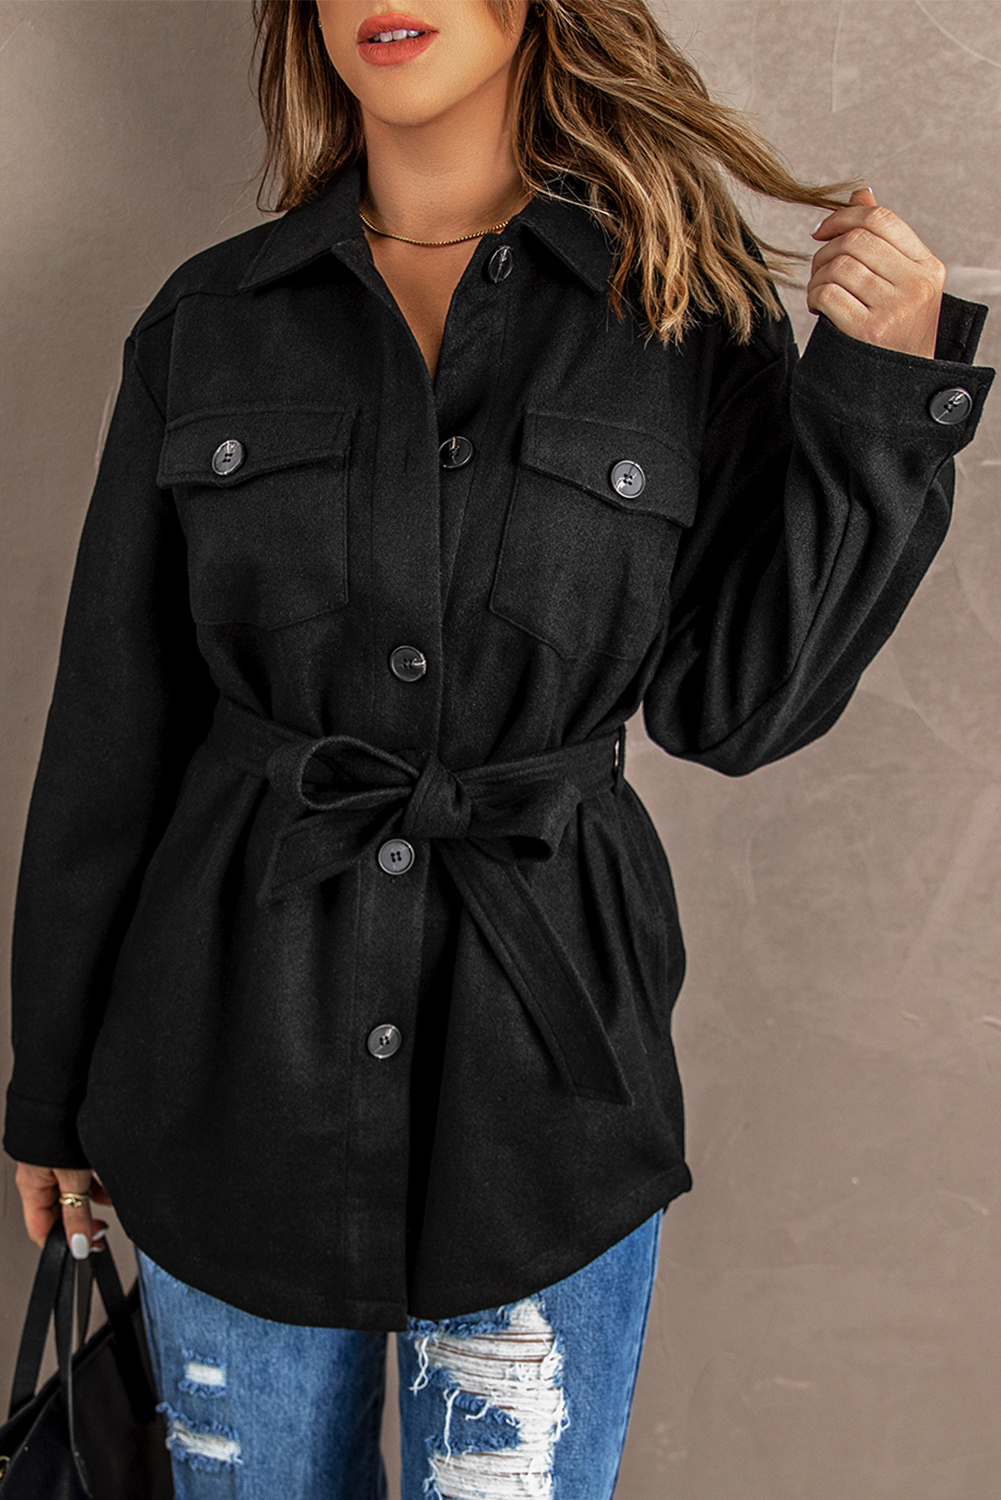 Wholesale Black Lapel Button Up COAT with Chest Pockets 